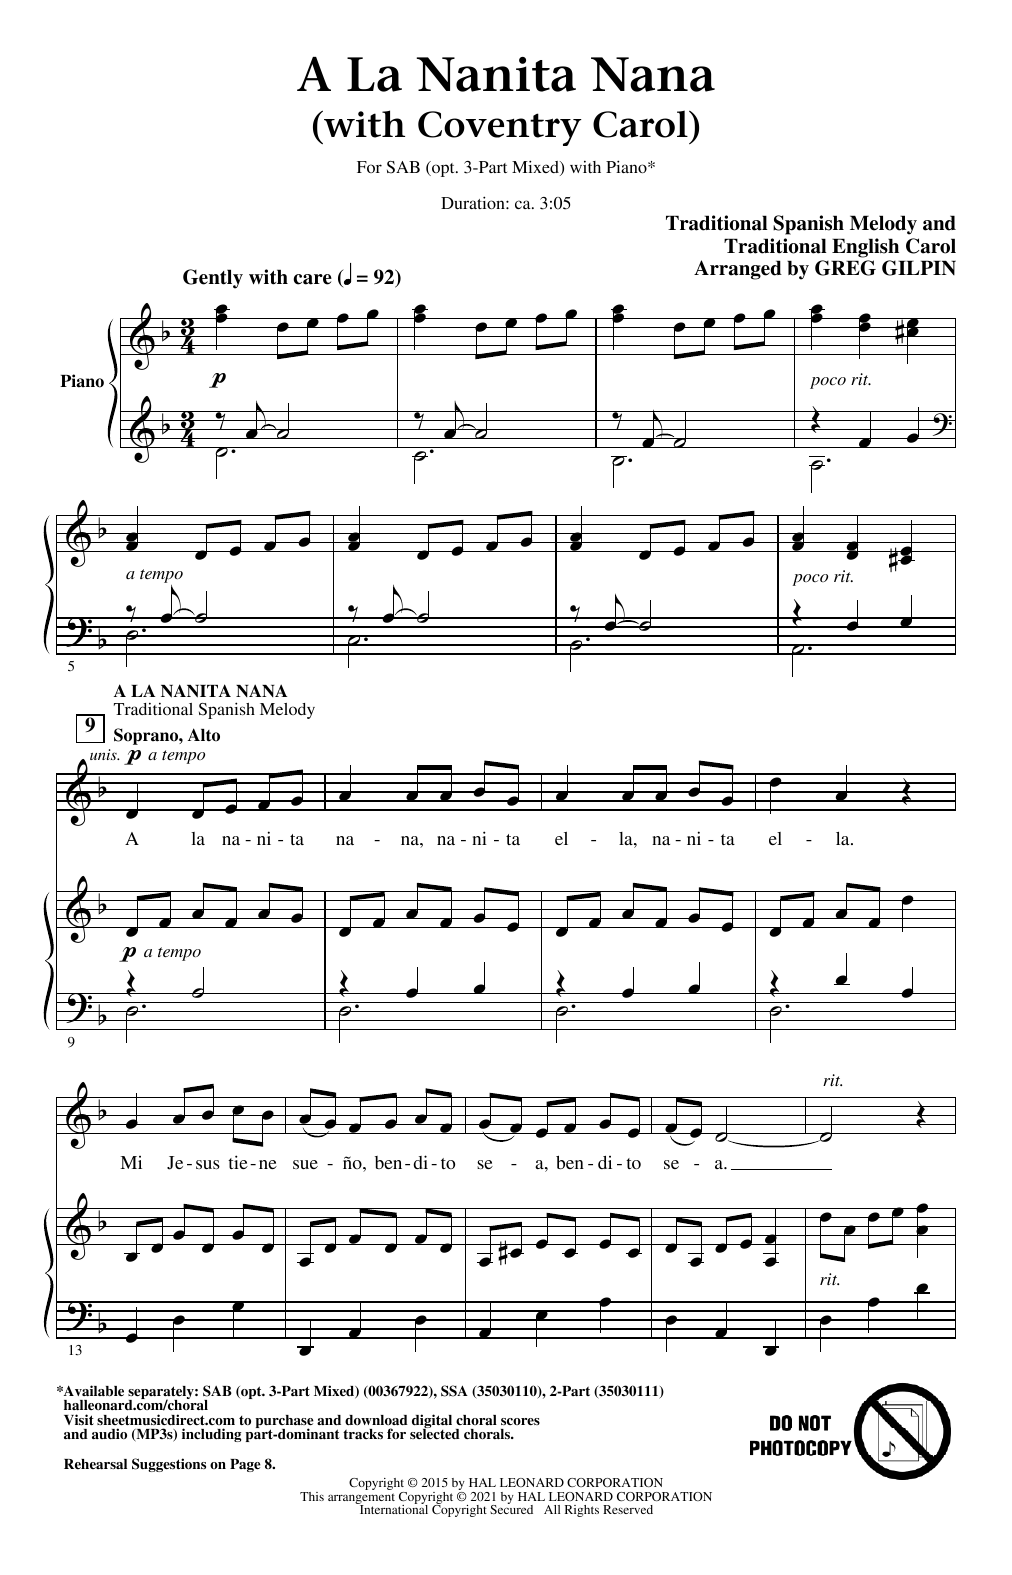 Download Greg Gilpin A La Nanita Nana (with Coventry Carol) Sheet Music and learn how to play SAB Choir PDF digital score in minutes